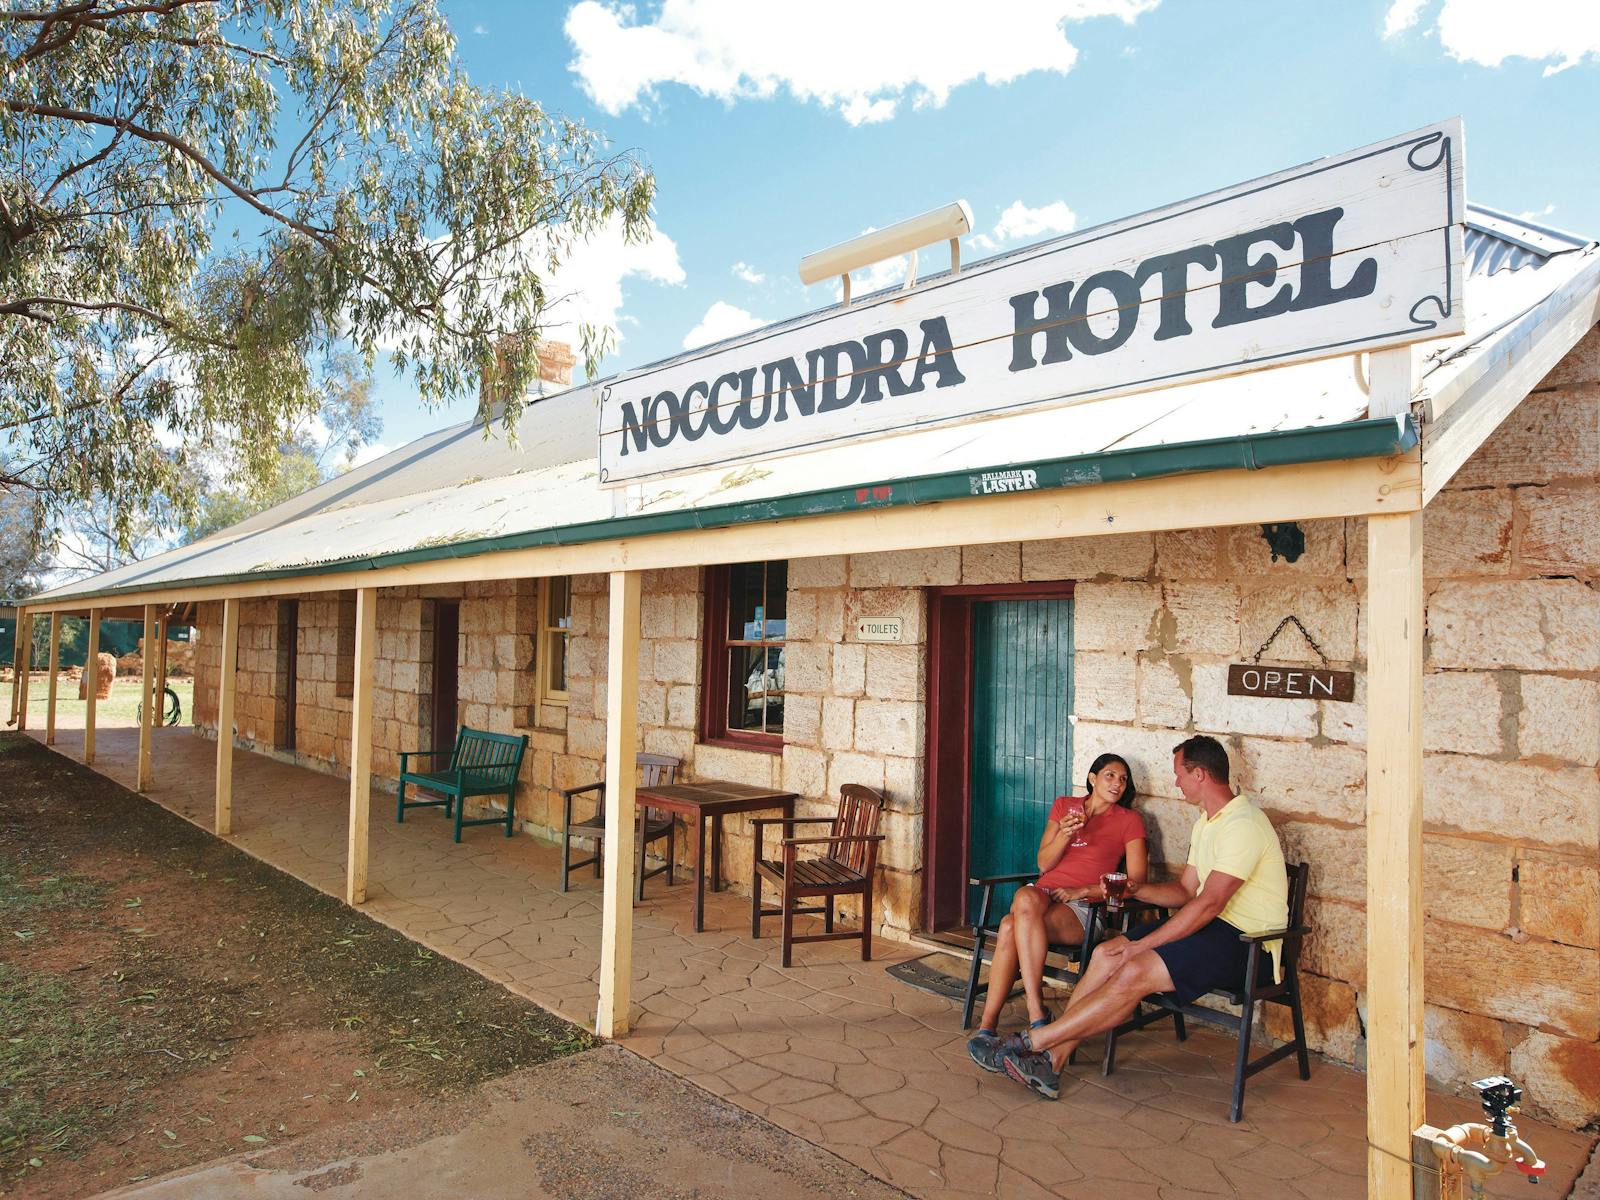 Noccundra Hotel, Outback Queensland